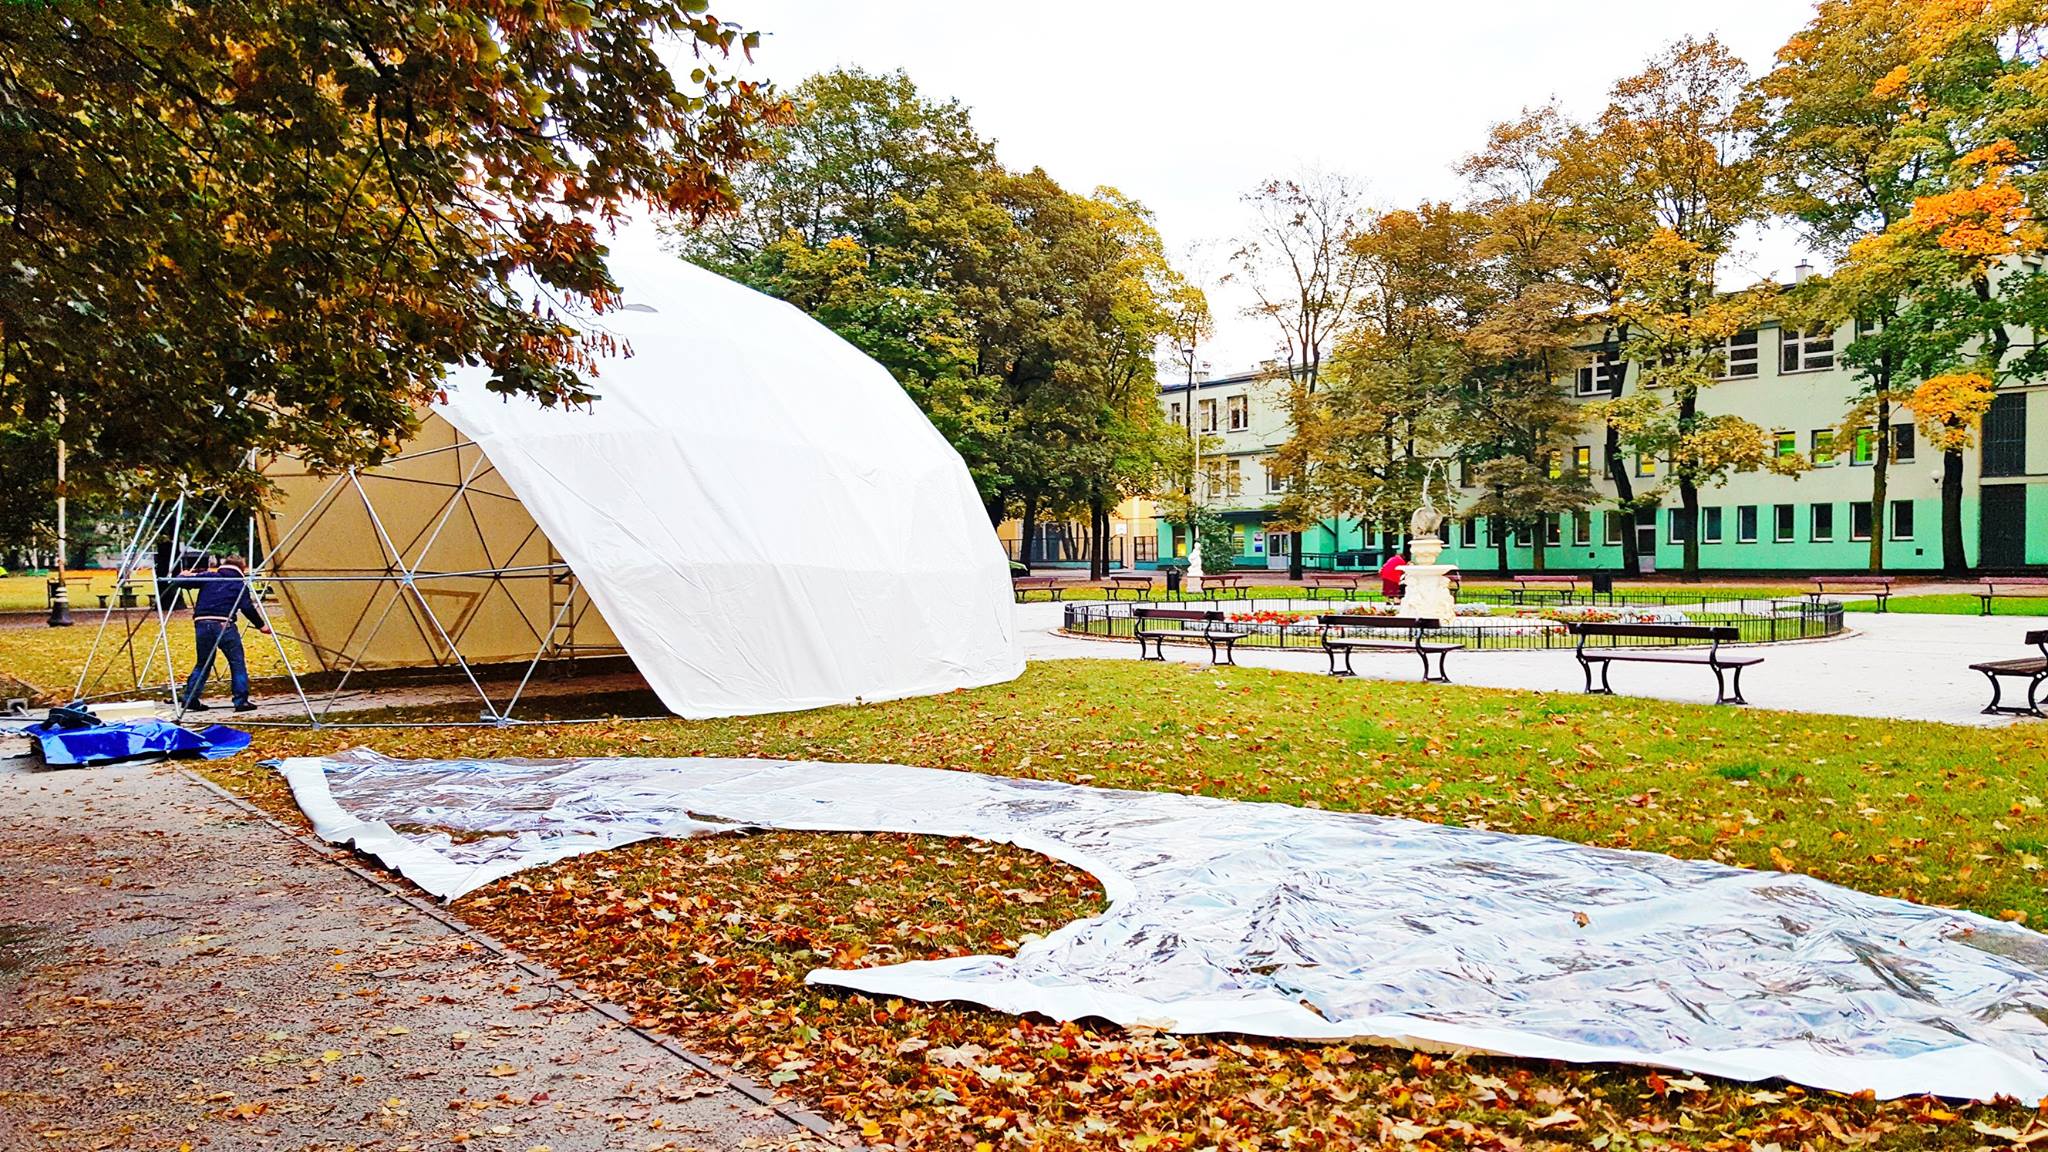 Portable Dome Ø11m For LIGHT MOVE FESTIVAL | Kinetic Art, Lodz, Poland